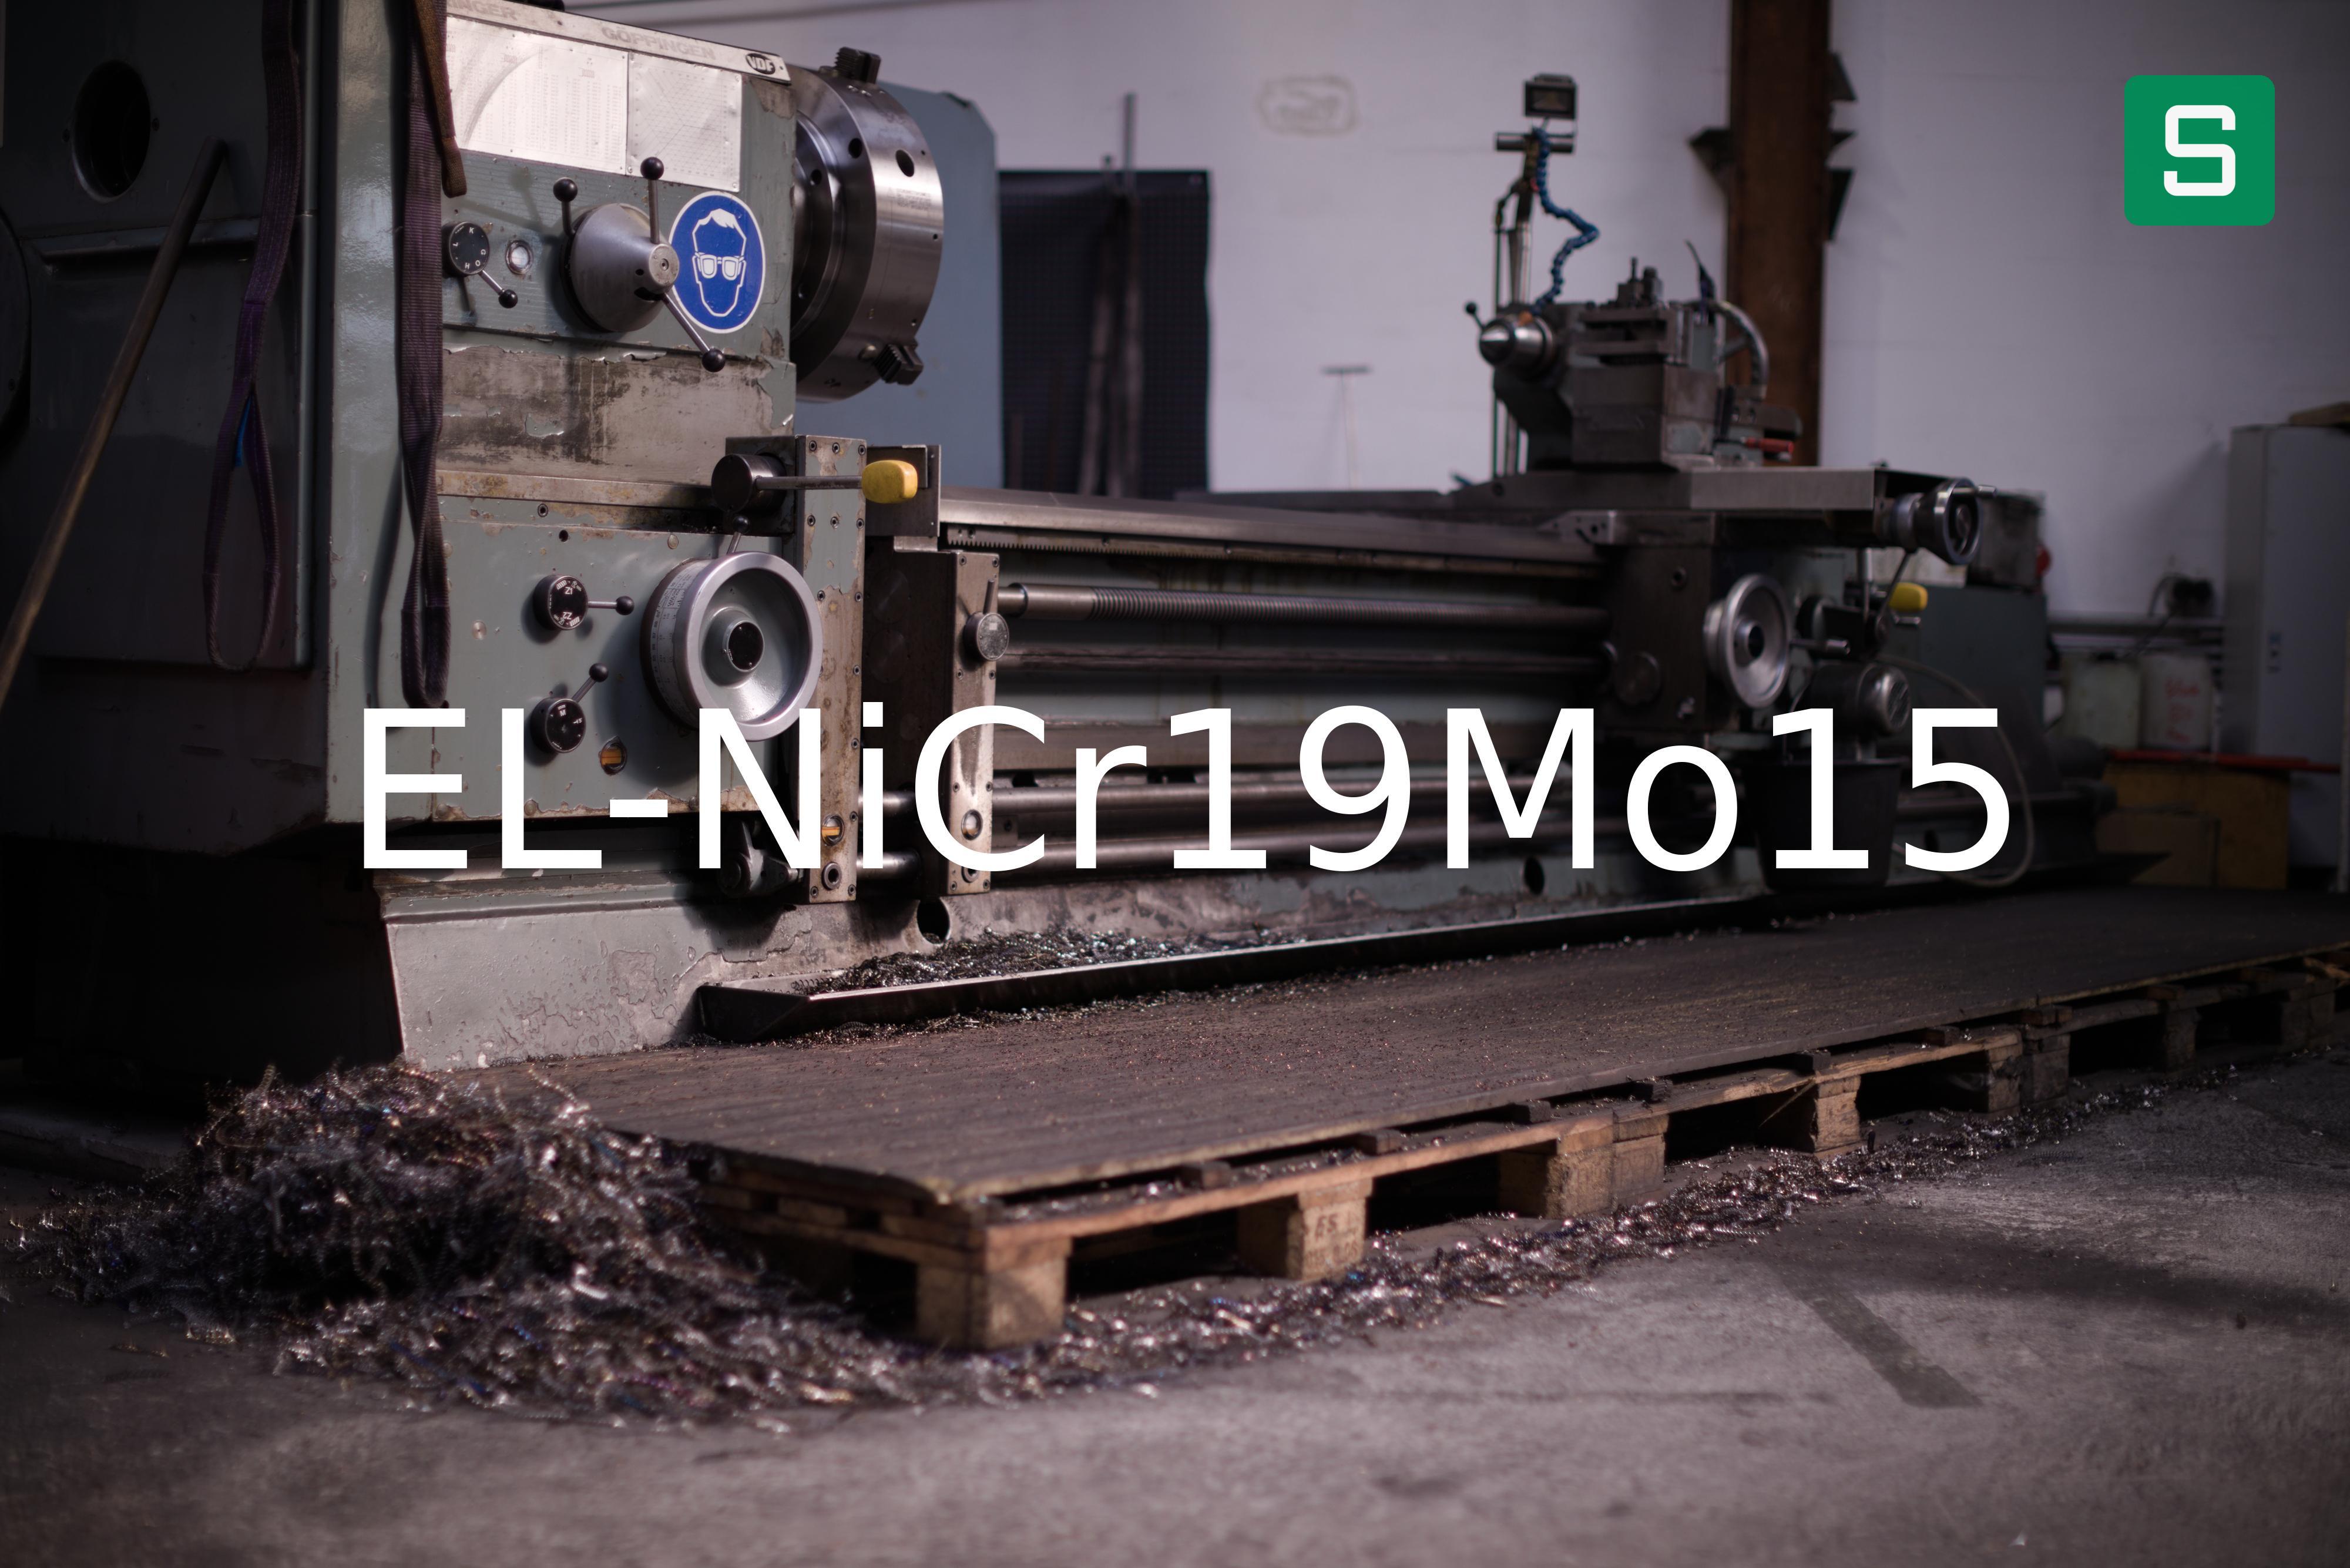 Stahlwerkstoff: EL-NiCr19Mo15